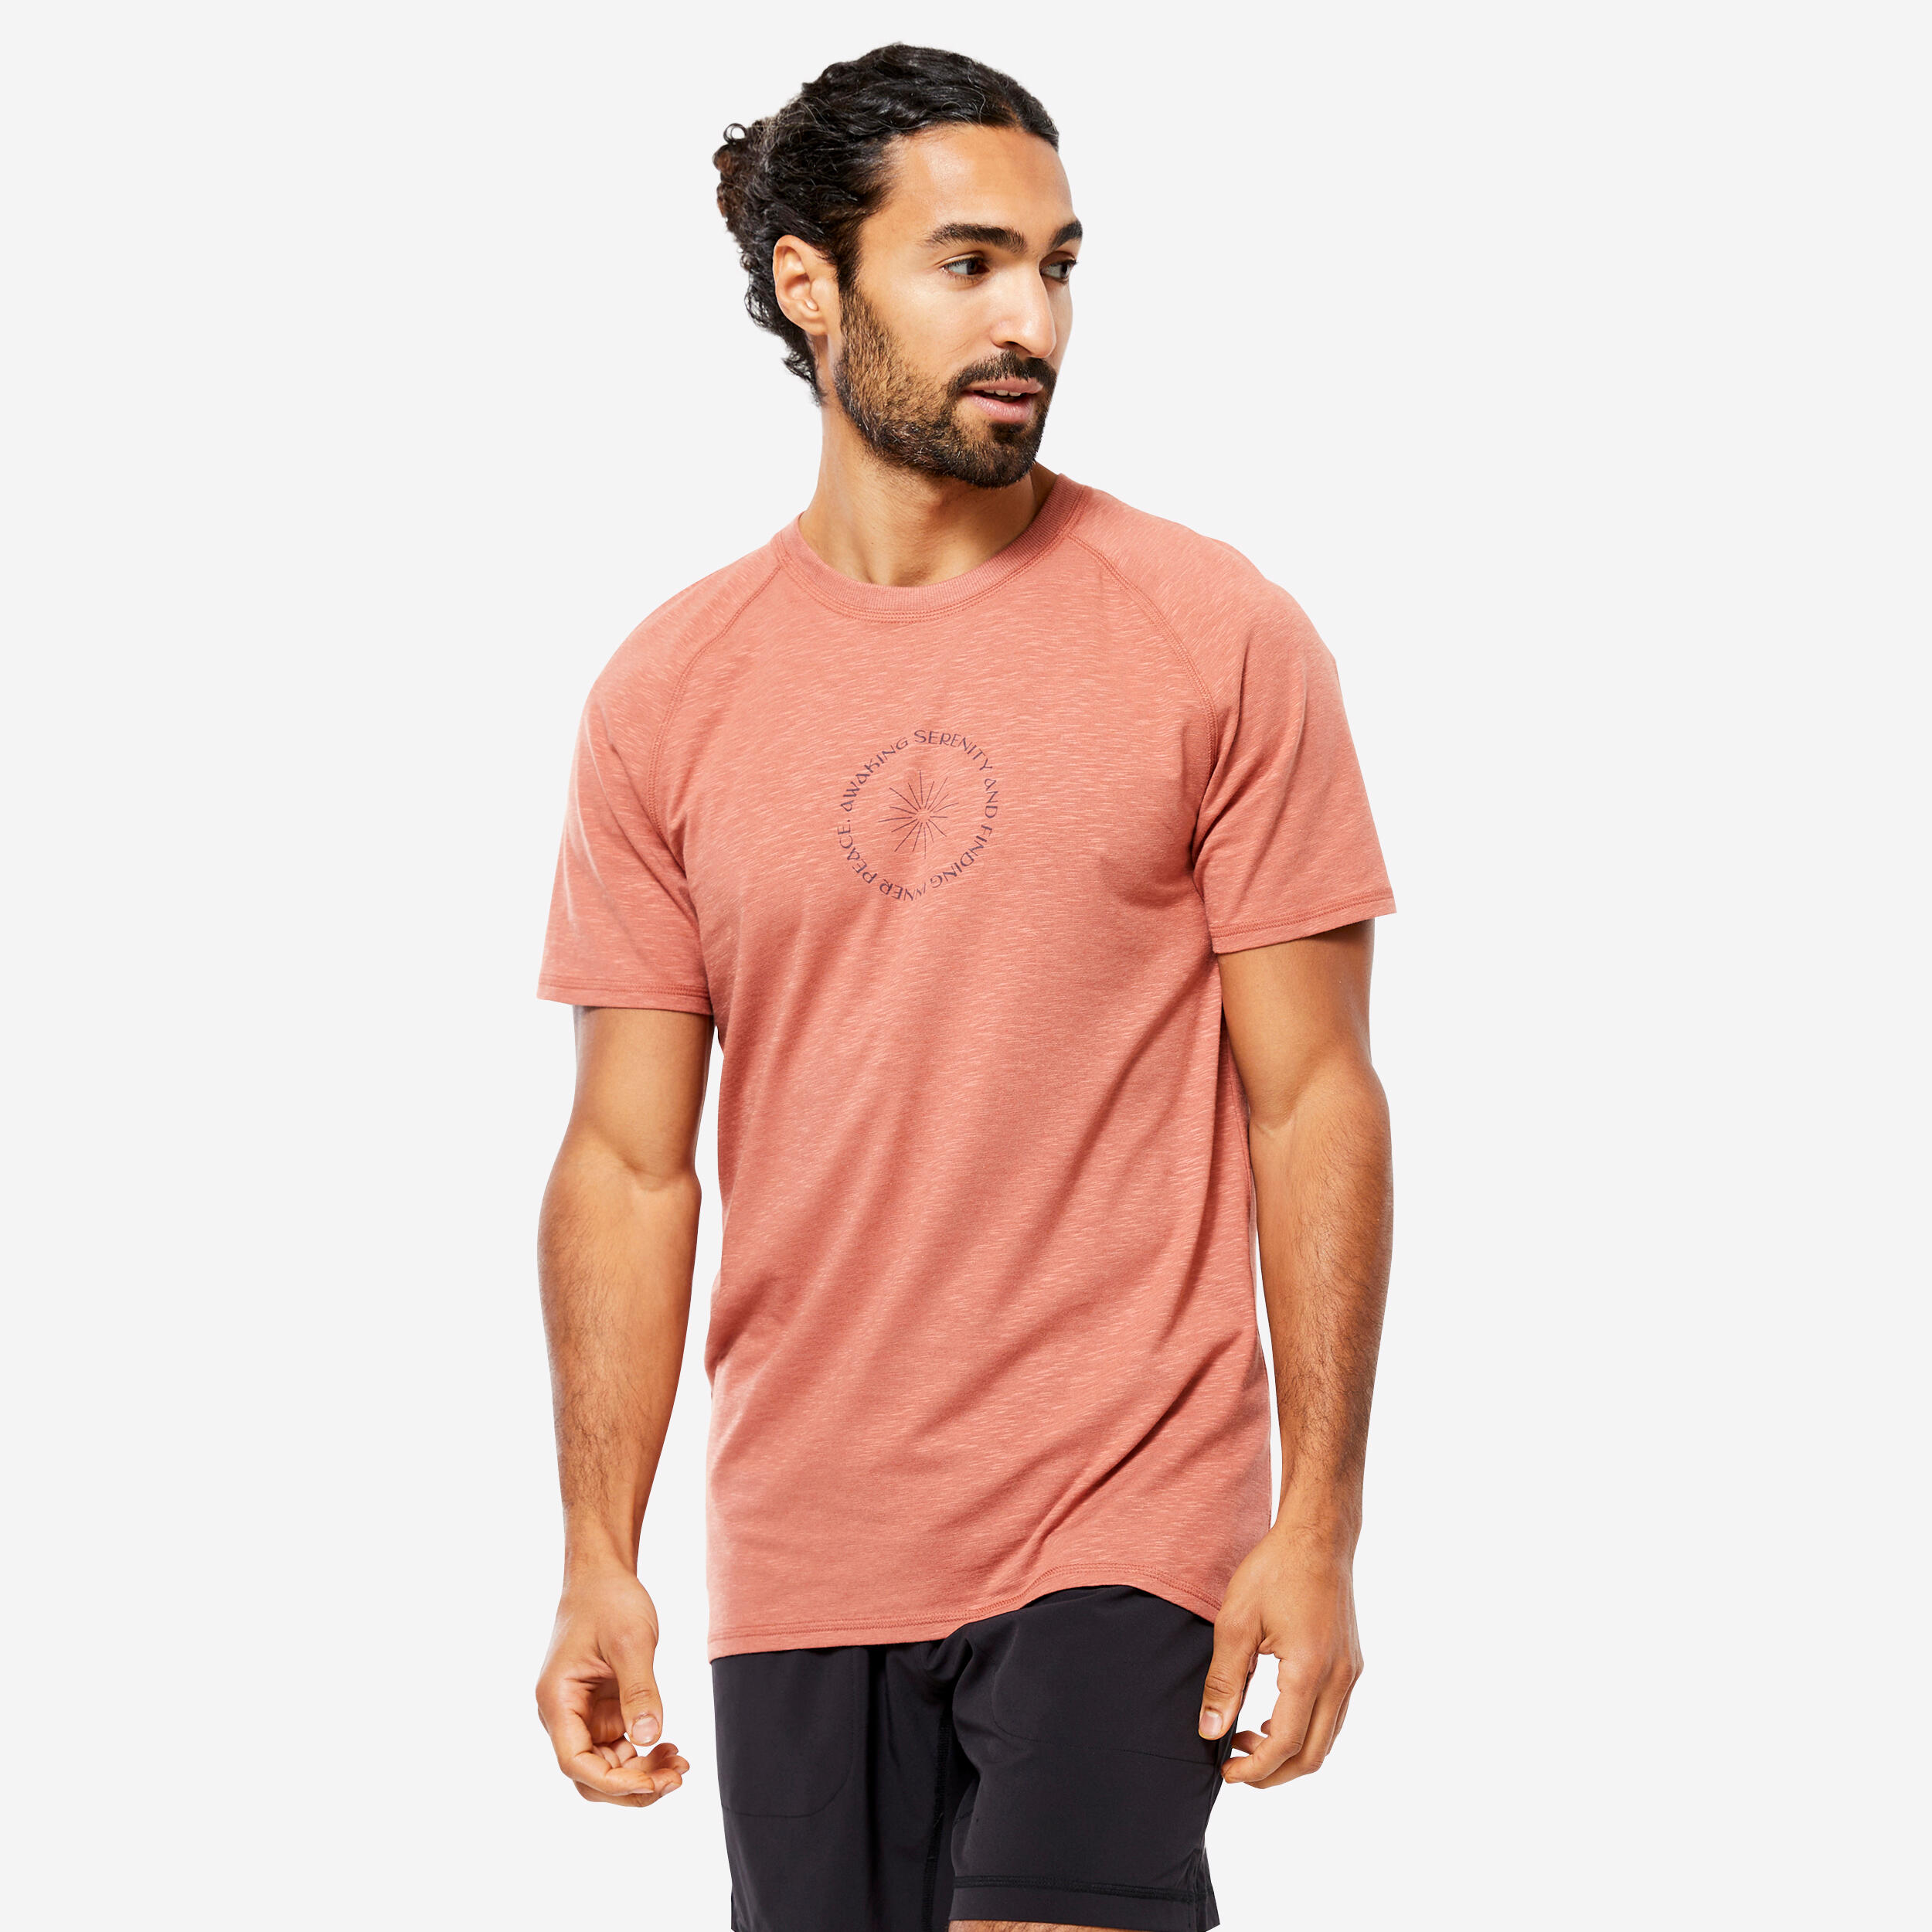 KIMJALY Men's Short-Sleeved Gentle Yoga T-Shirt in Fabric - Terracotta